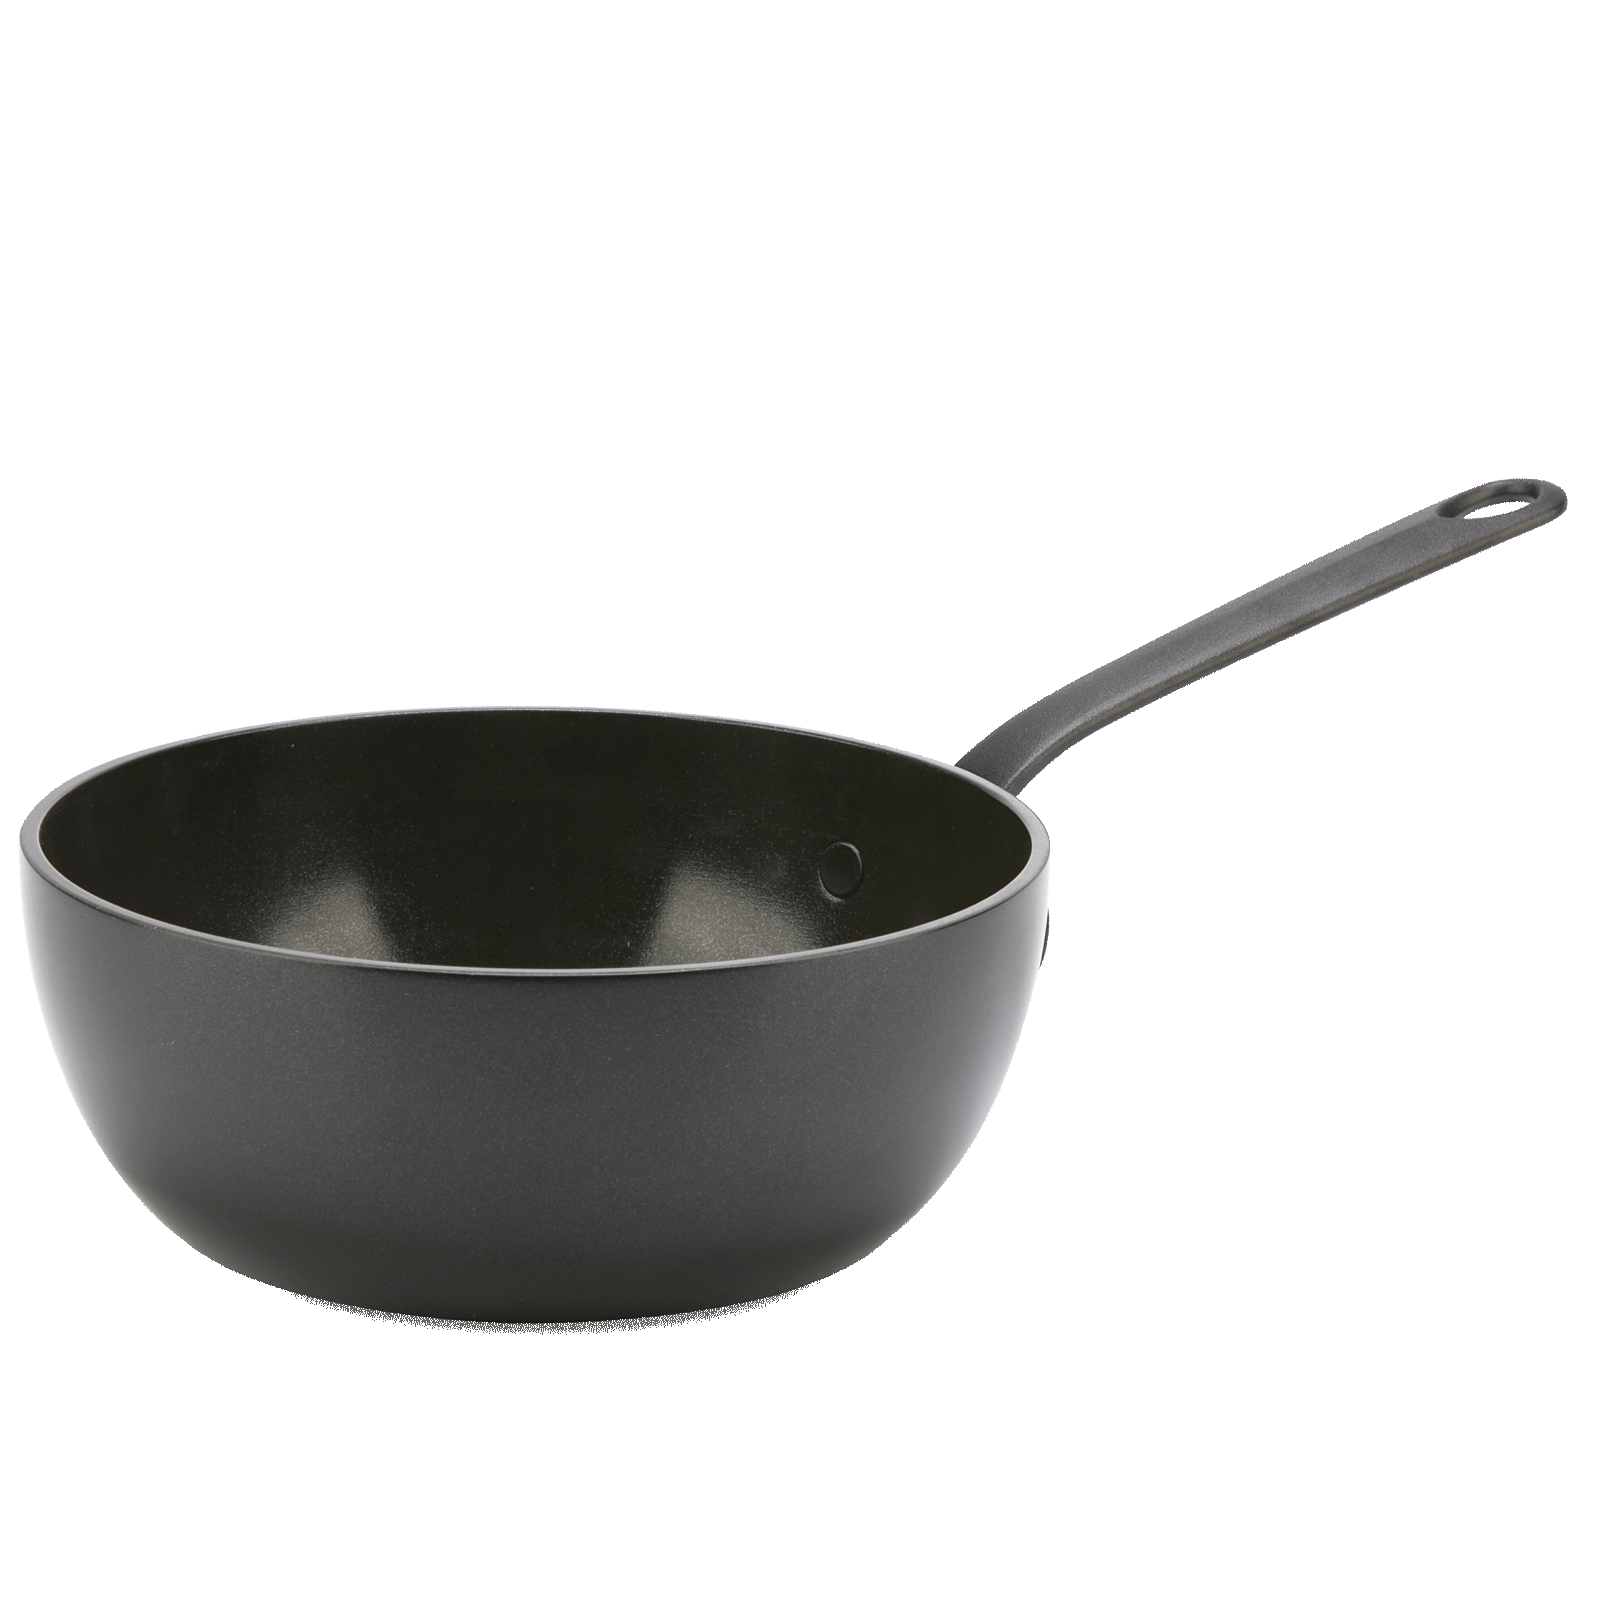 Craft Chef's Pan –